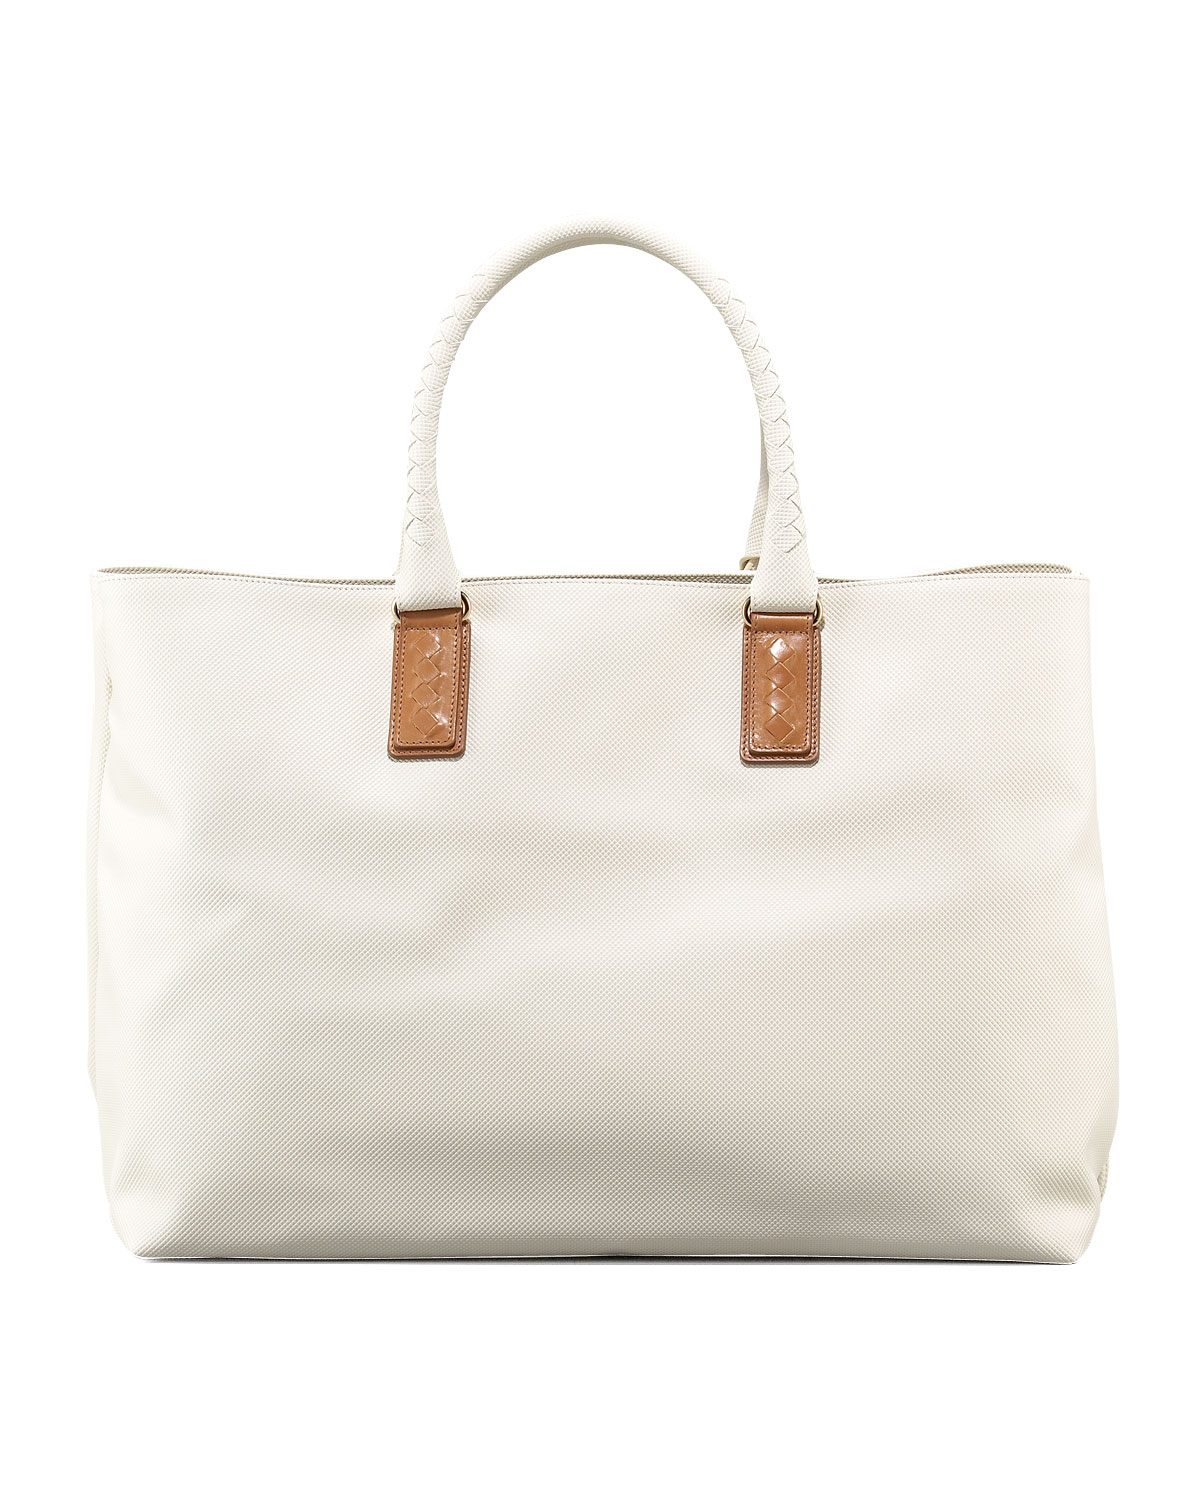 Bottega Veneta Marco Polo PVC Tote Bag Reference Guide - Spotted Fashion